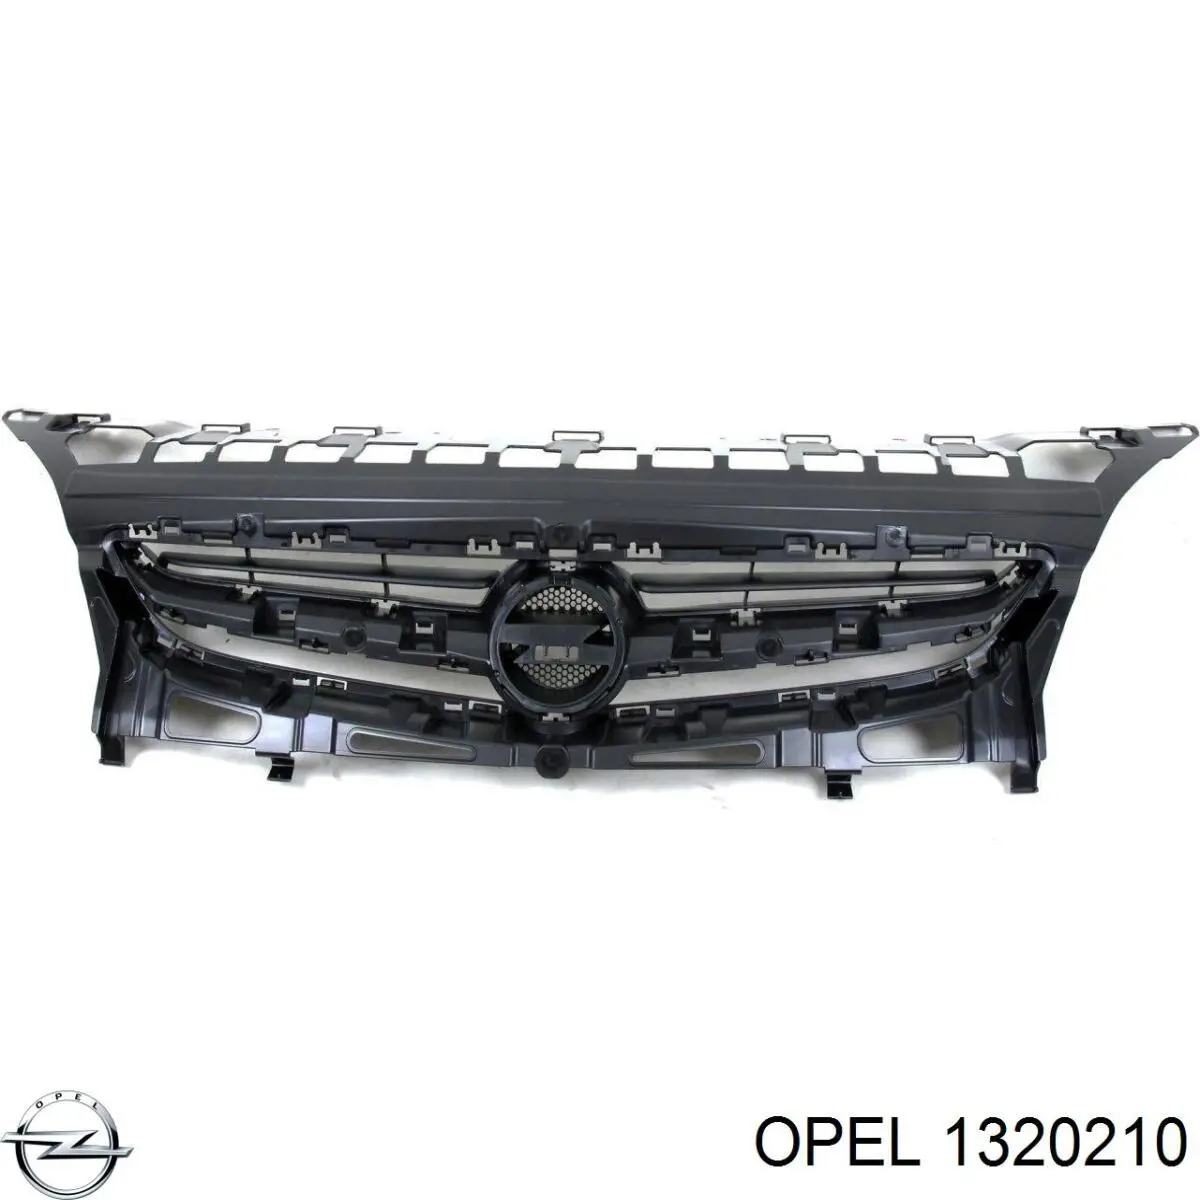 1320210 Opel grelha do radiador